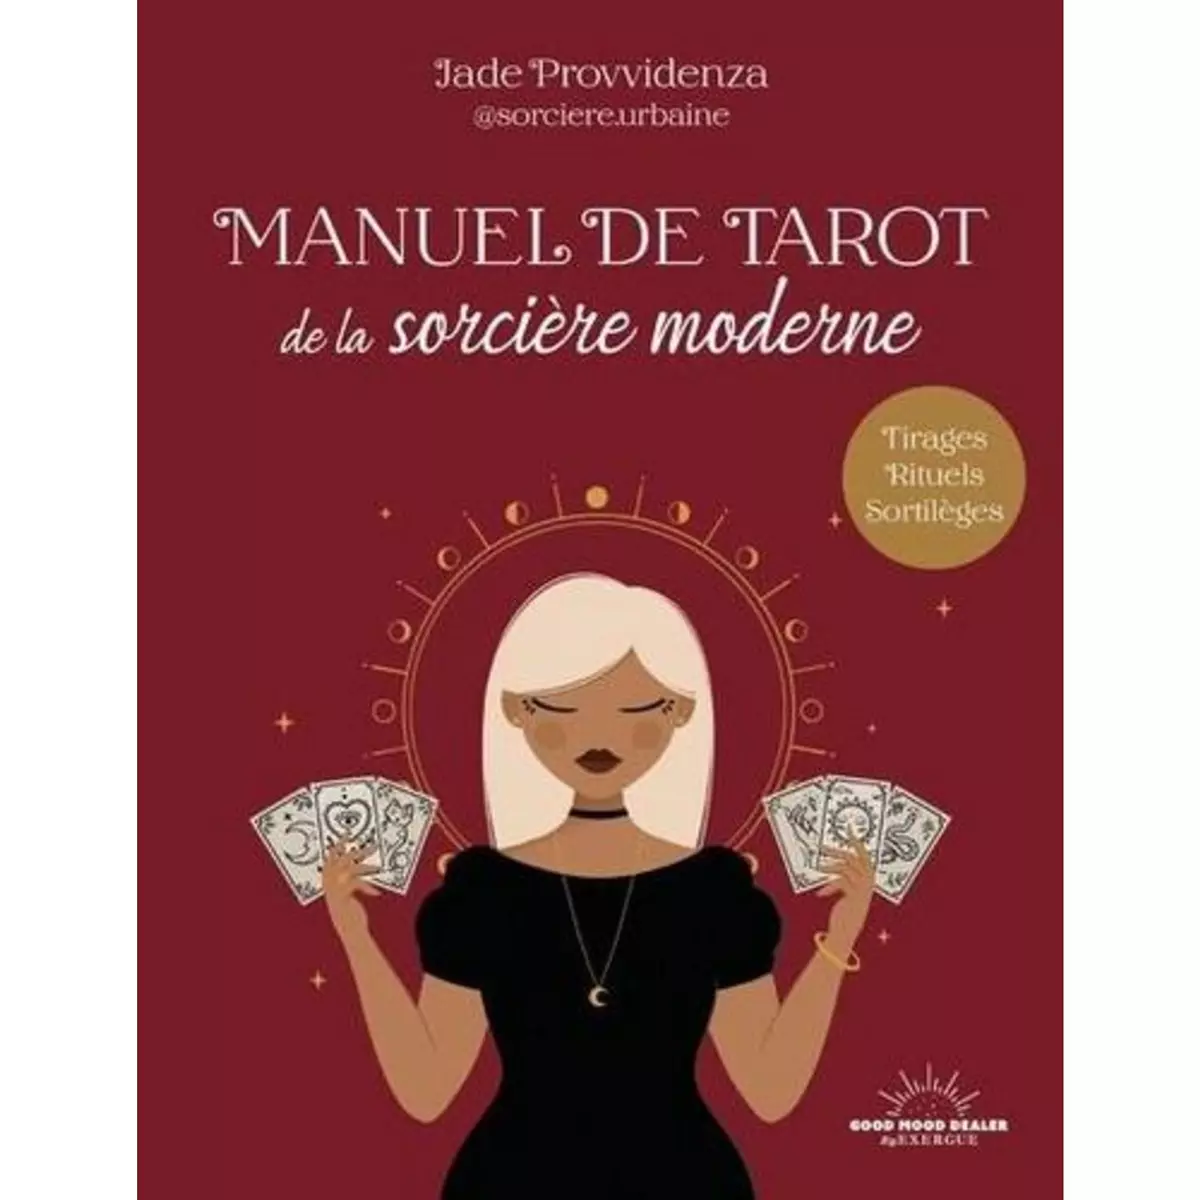  MANUEL DE TAROT DE LA SORCIERE MODERNE, Provvidenza Jade